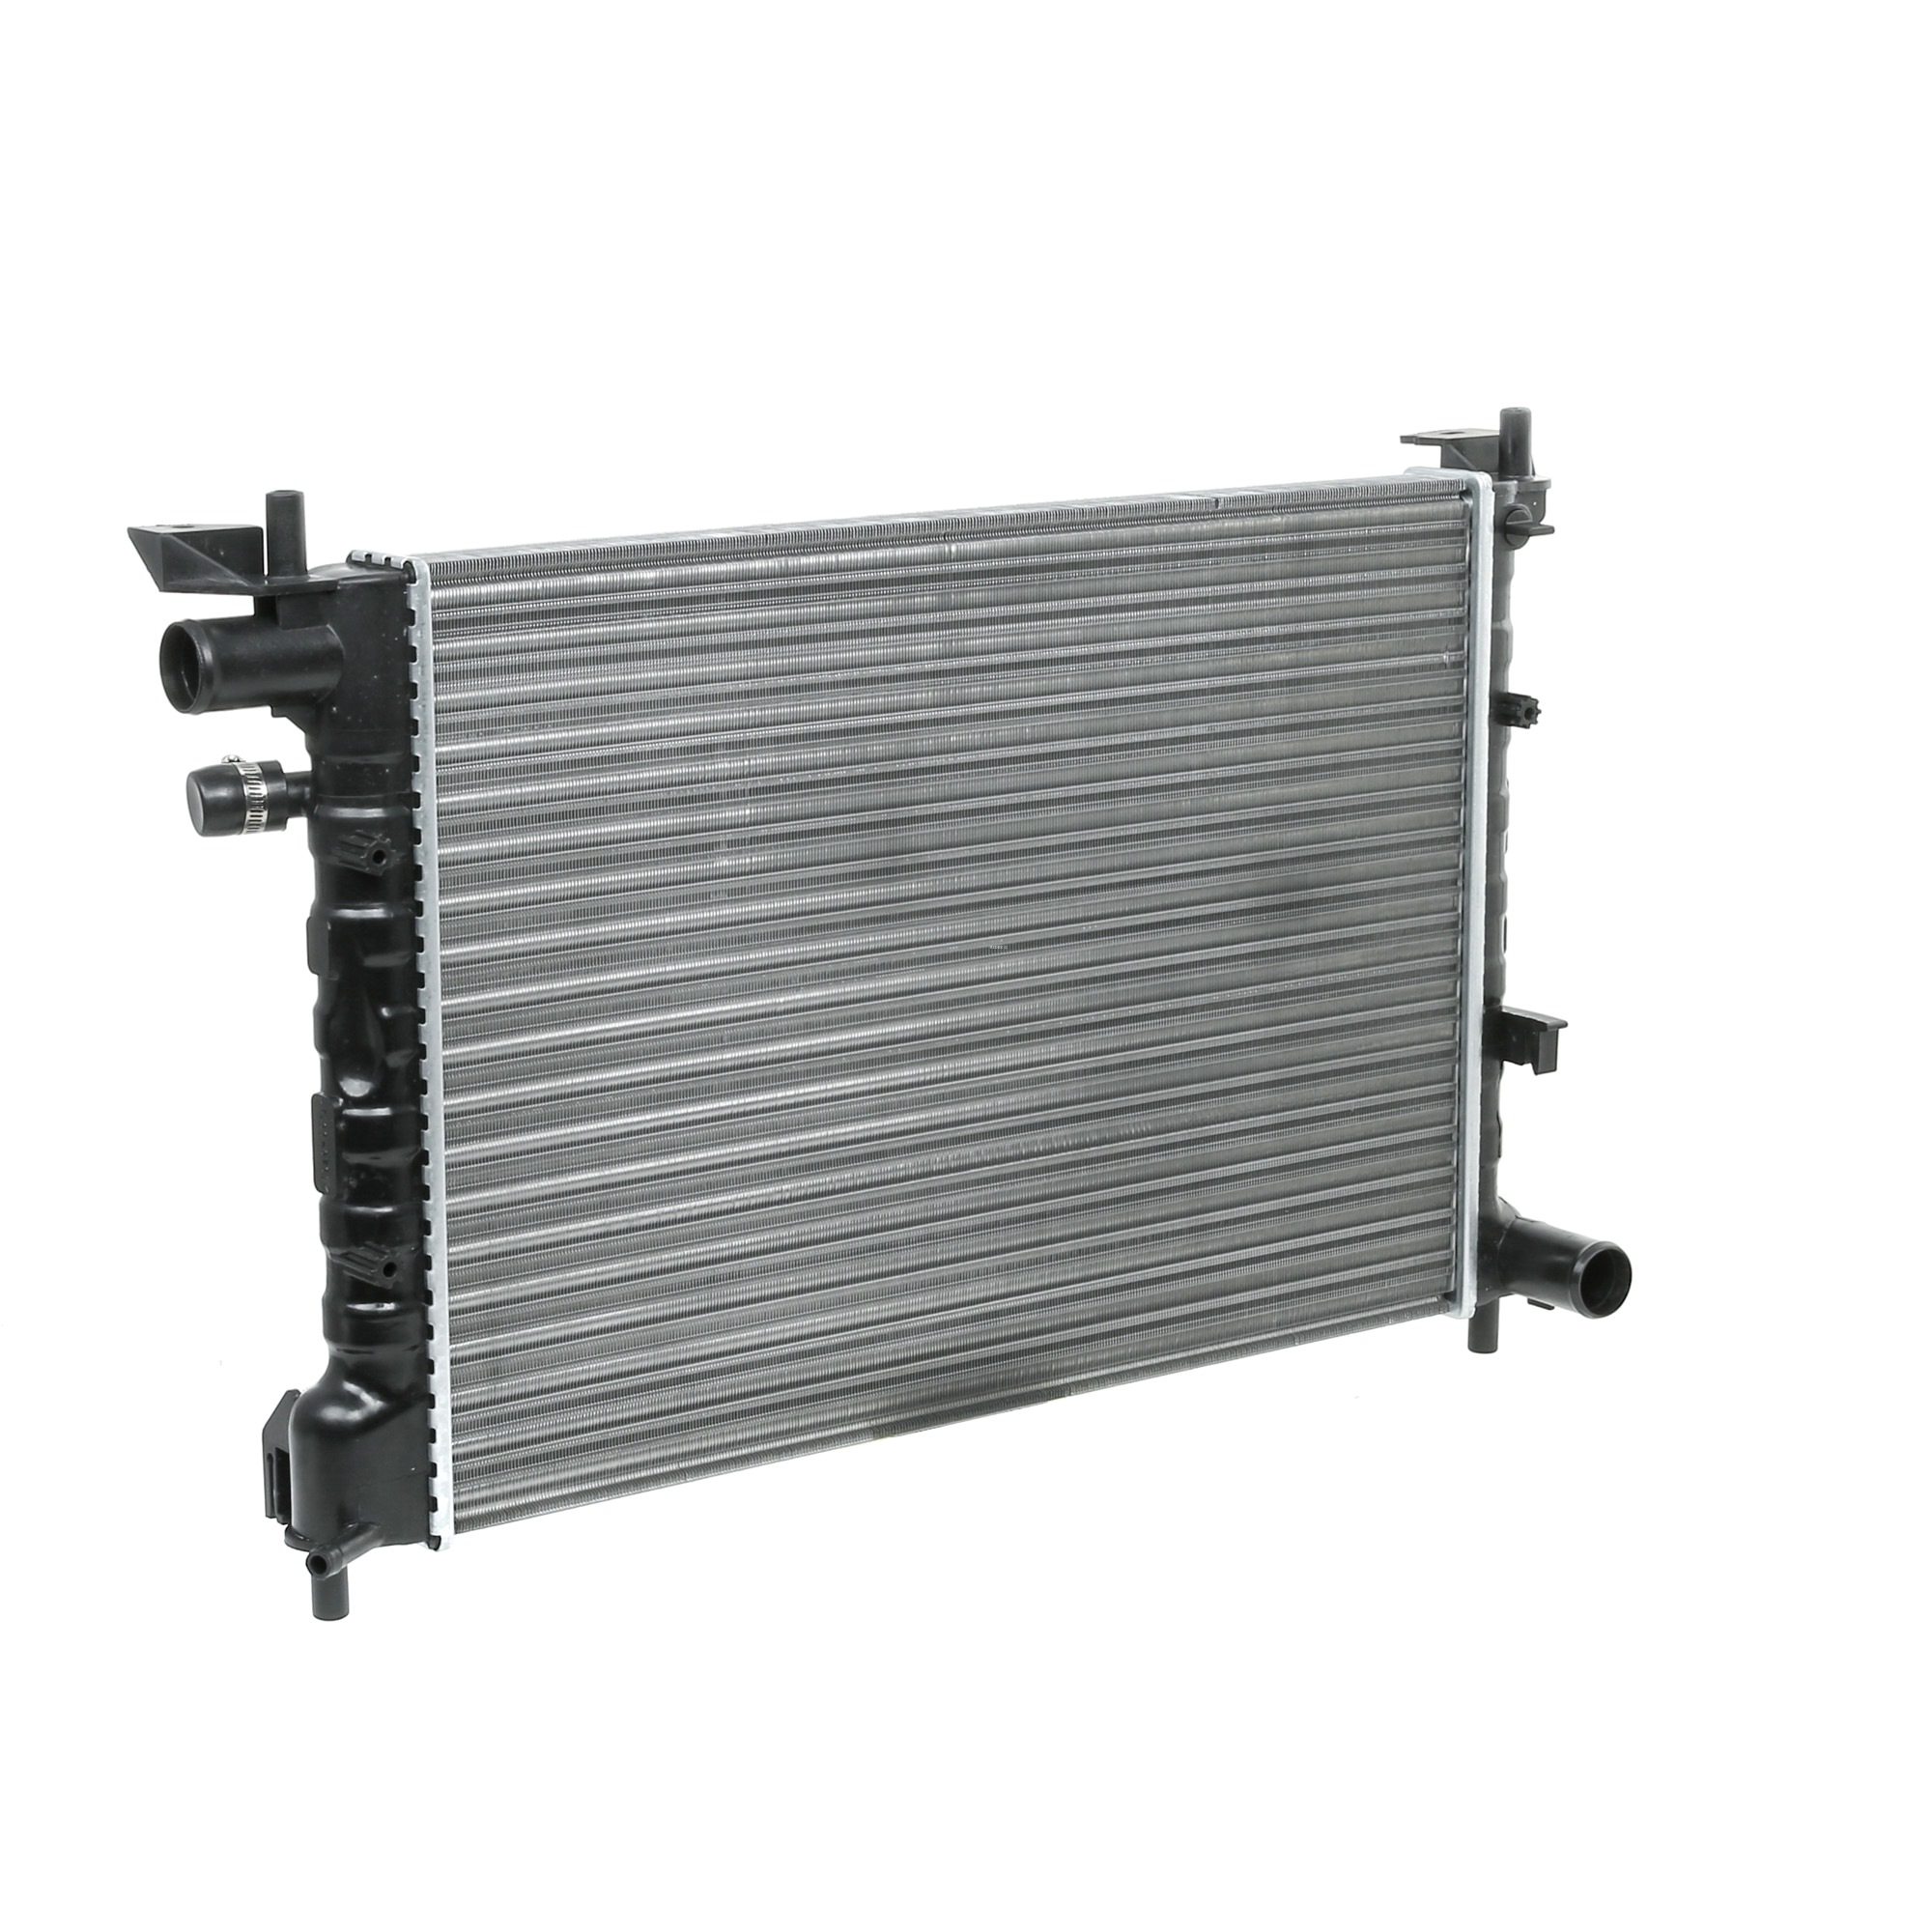 RIDEX 470R0325 Engine radiator Aluminium, Plastic, for vehicles with air conditioning, Manual Transmission